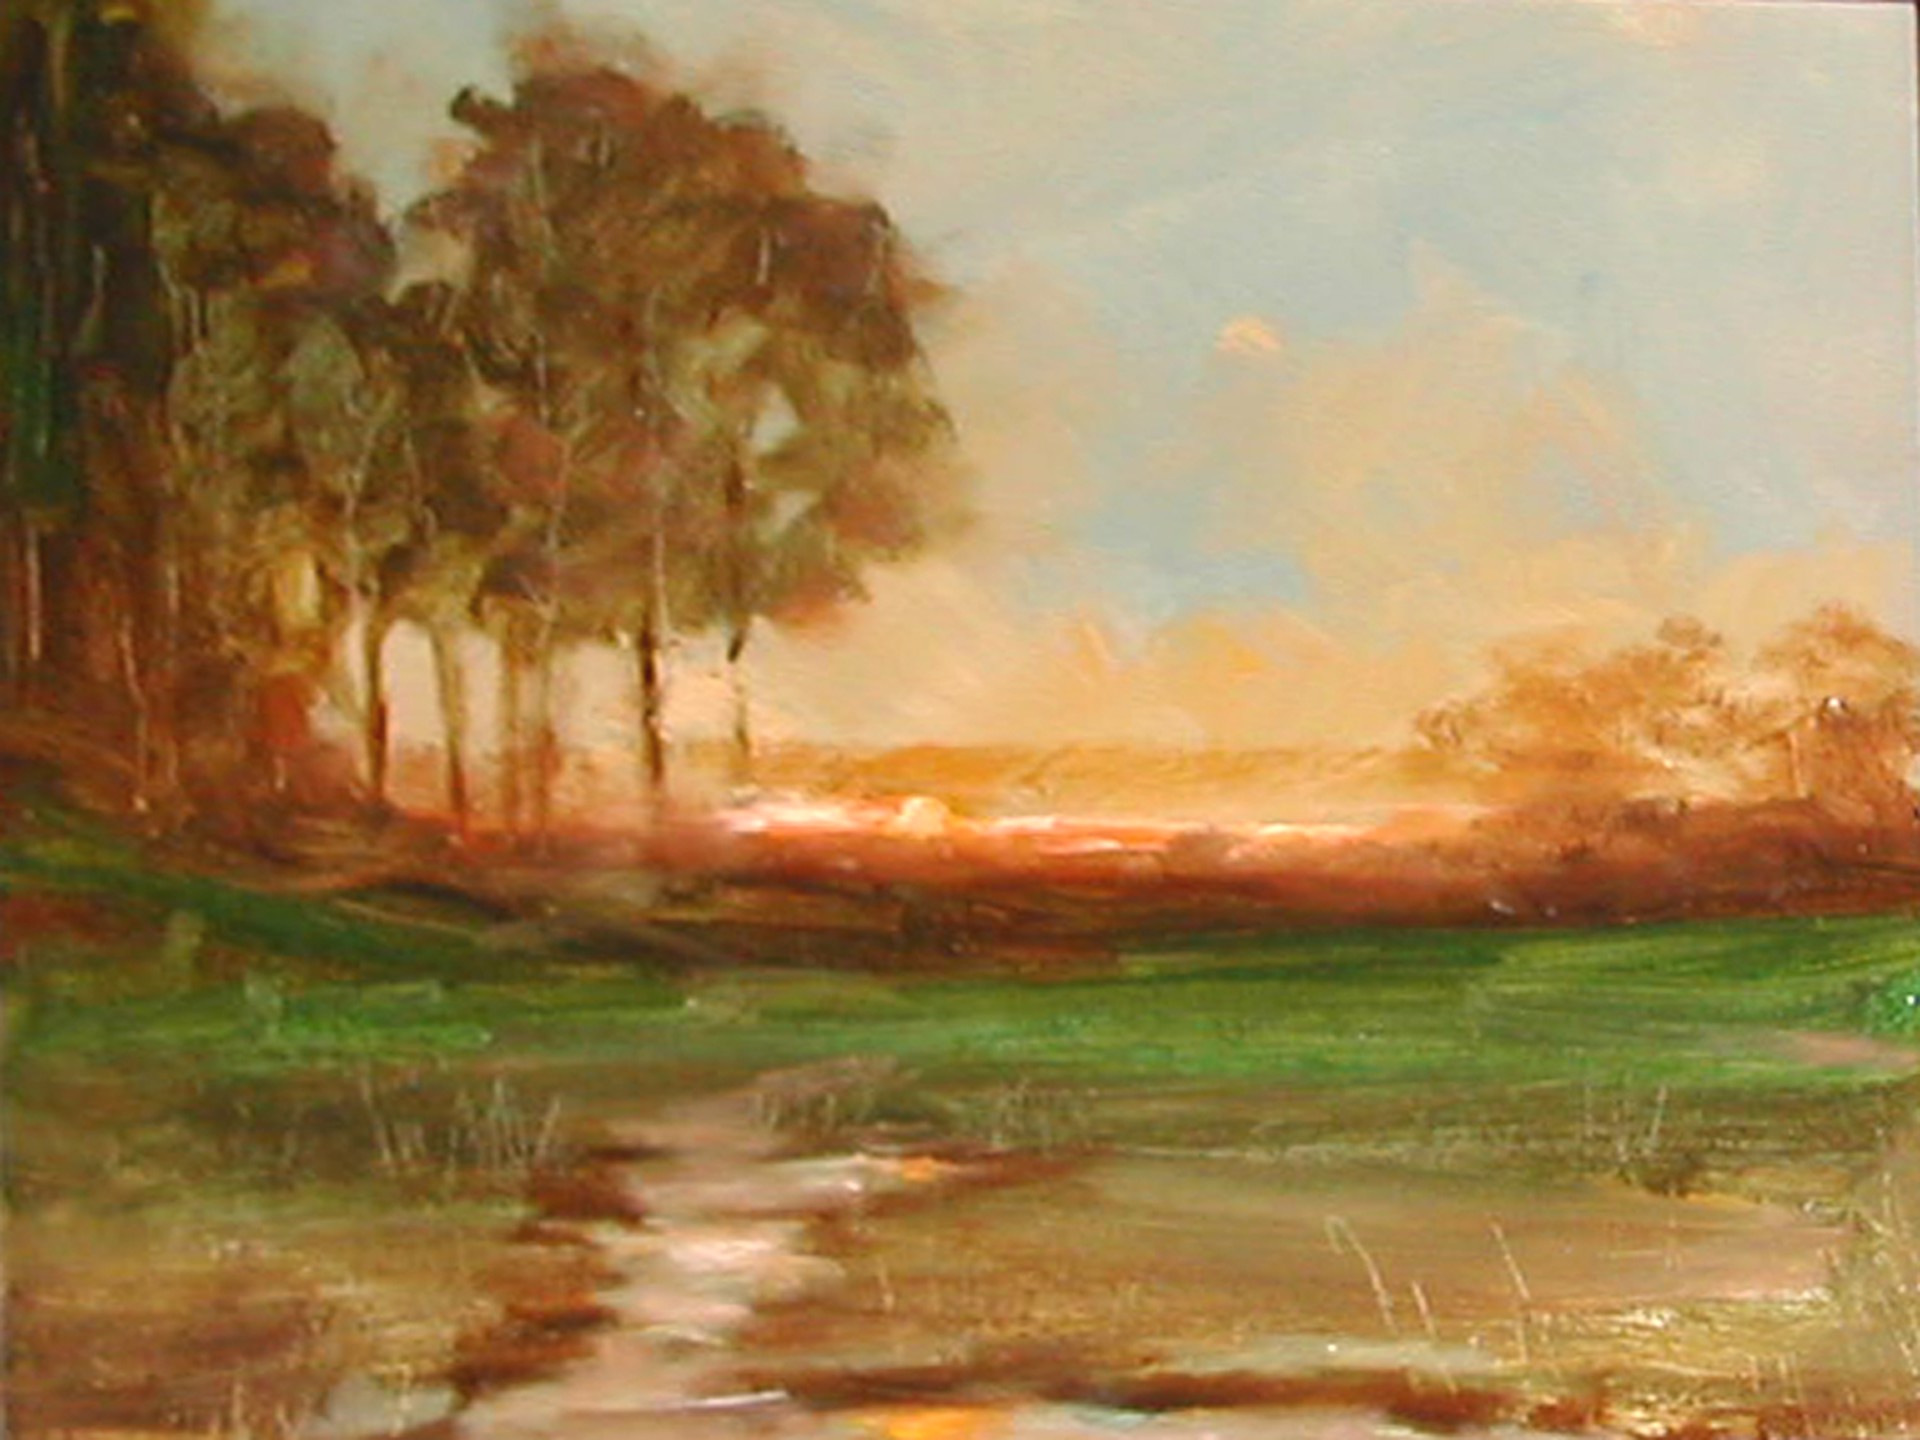 John's Creek by John Reynolds